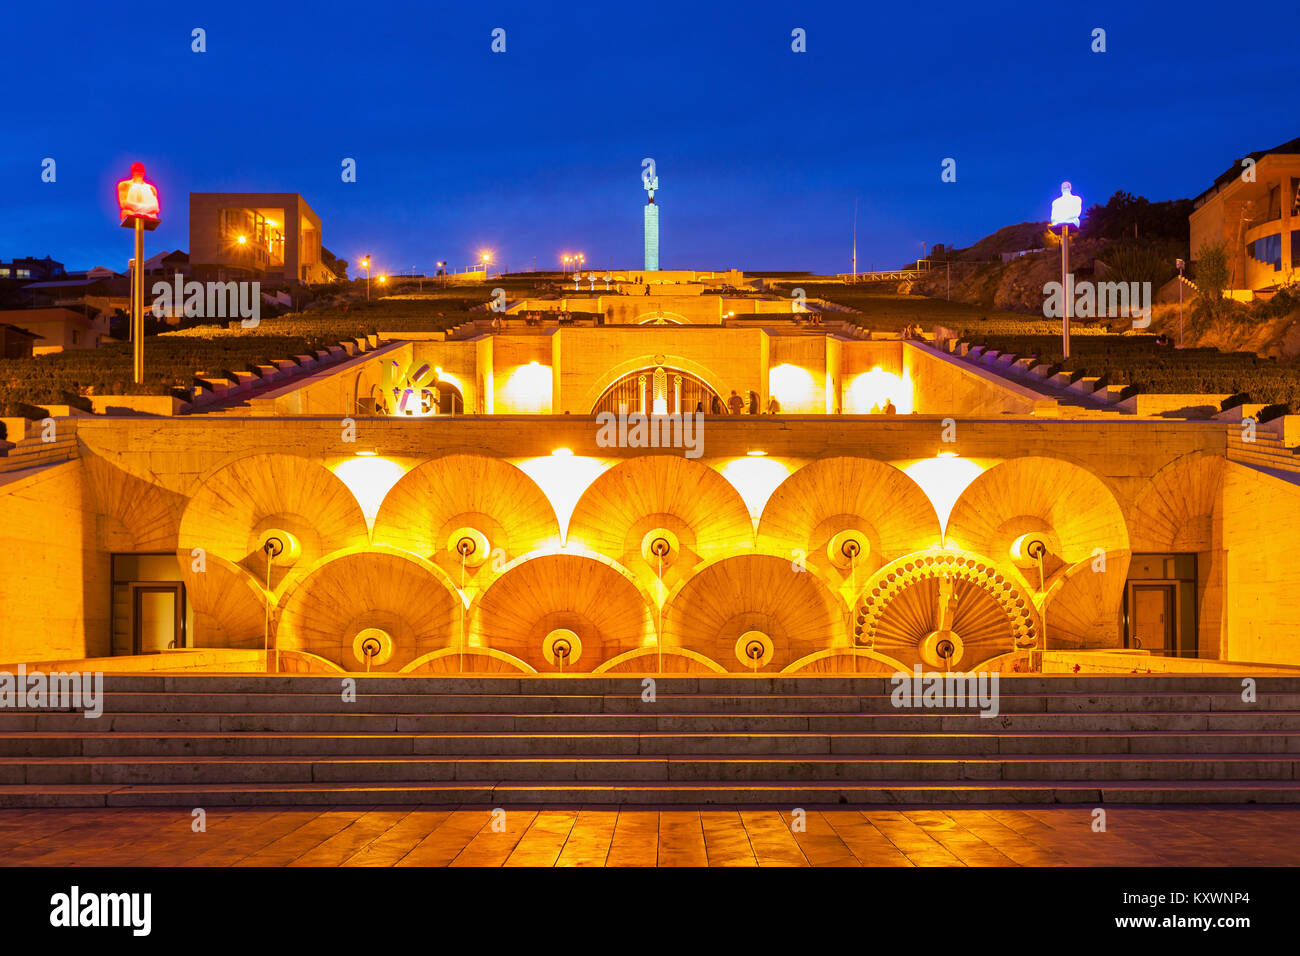 YEREVAN, ARMENIA - SEPTEMBER 29, 2015: The Cascade at night. It is a giant stairway in Yerevan, Armenia. Stock Photo